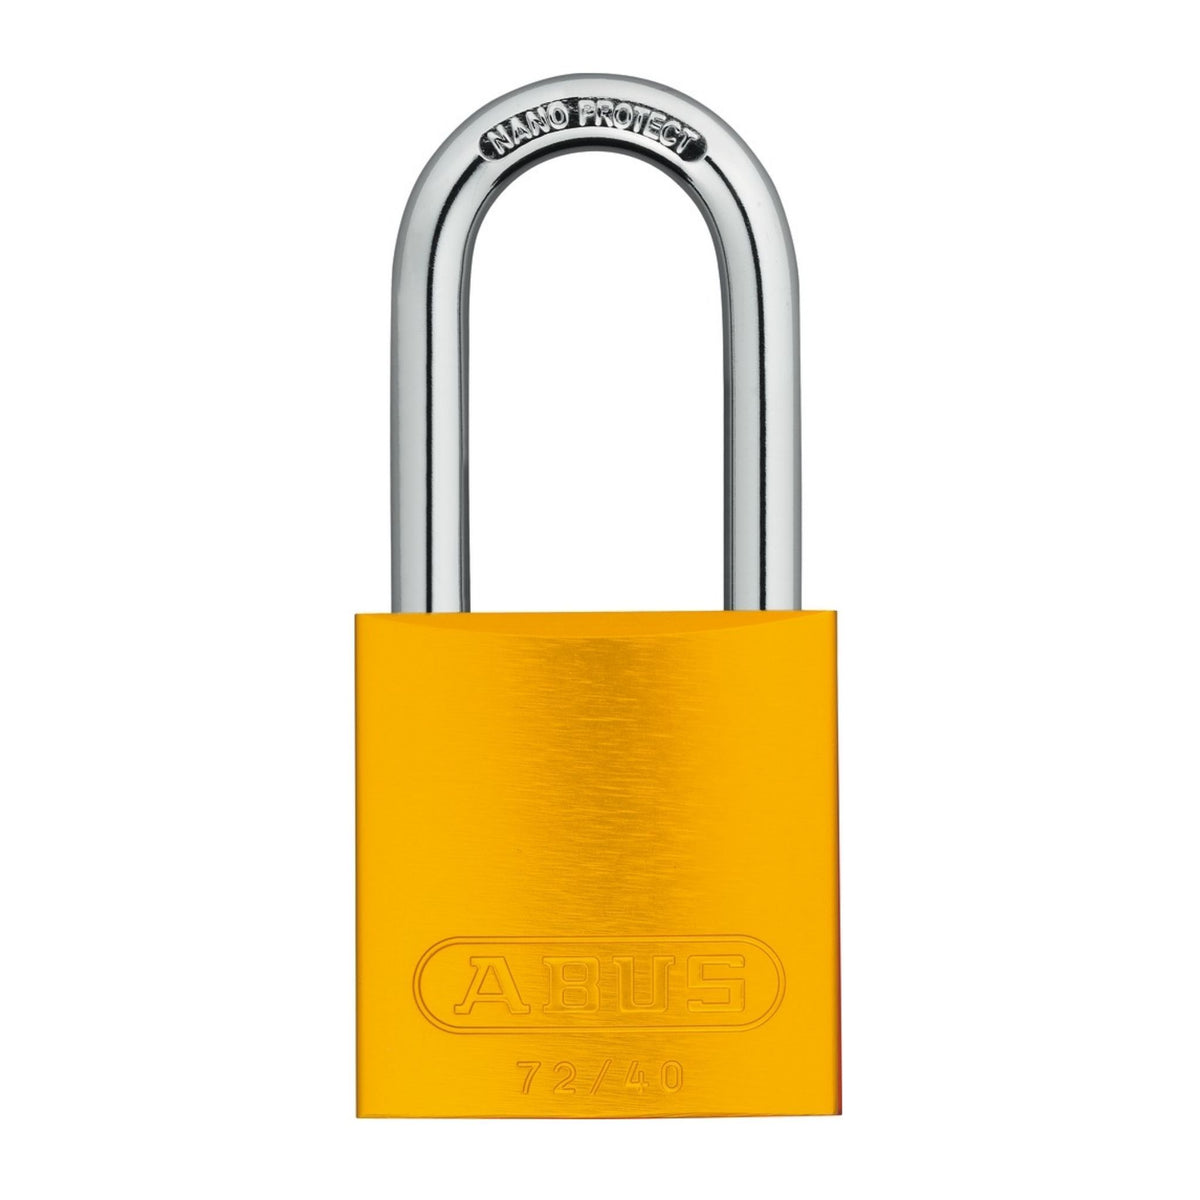 Abus 72/40HB40 KA TT00036 Yellow Titalium Safety Padlock with 1-1/2&quot; Shackle, Keyed Alike to Match Existing Key Number KATT00036 - The Lock Source